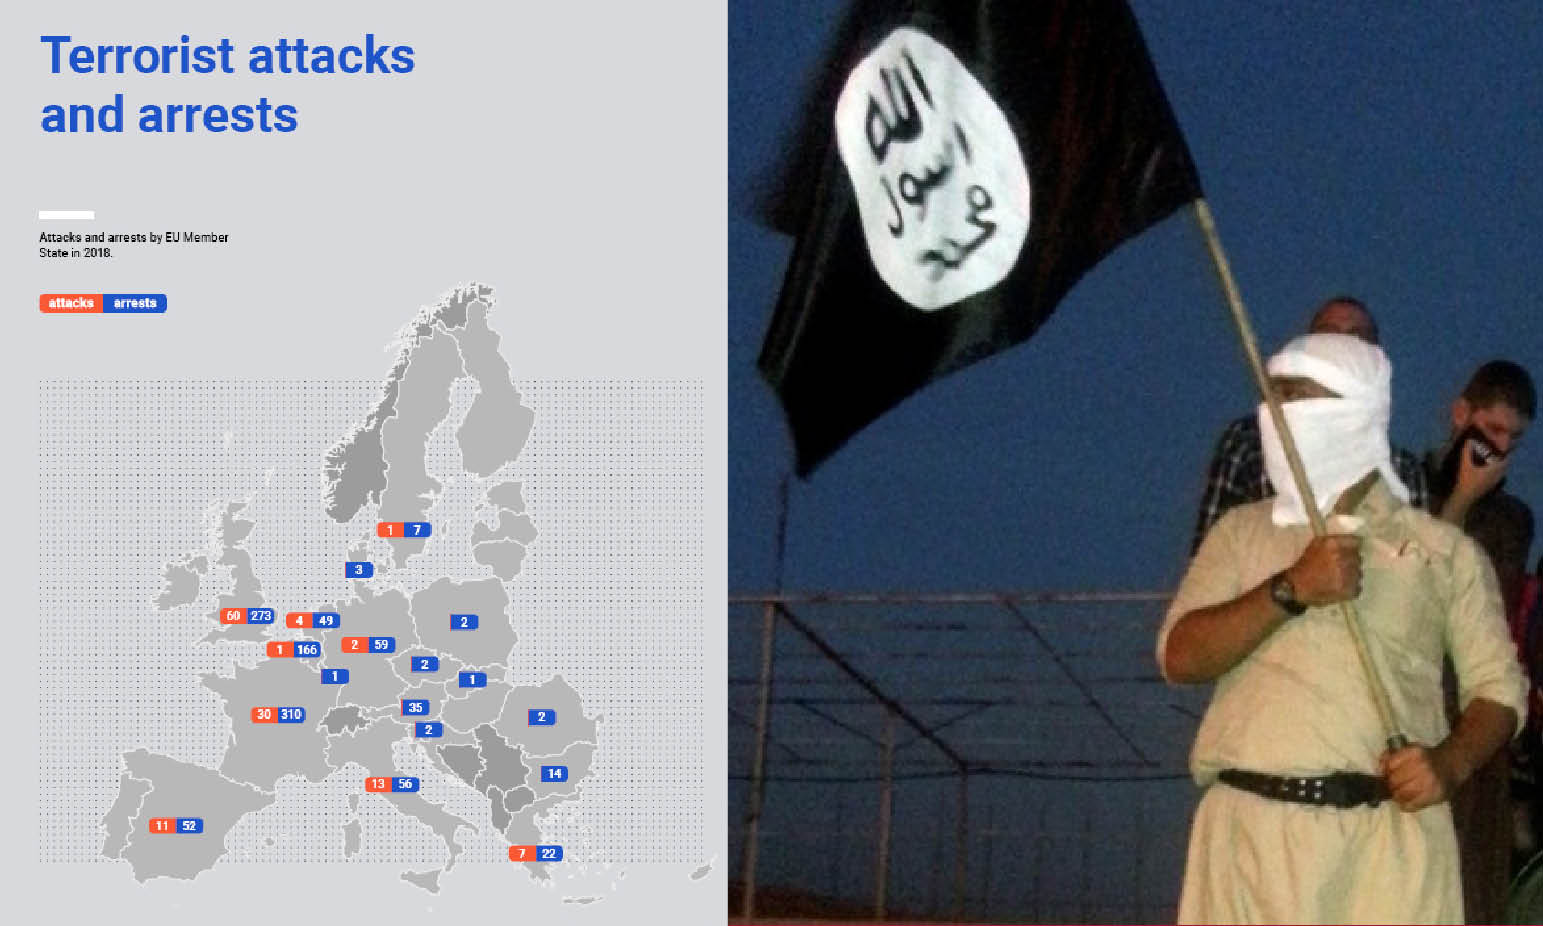 EUROPOL TERRORISM DOSSIER: JIHADIST NIGHTMARE IN EU